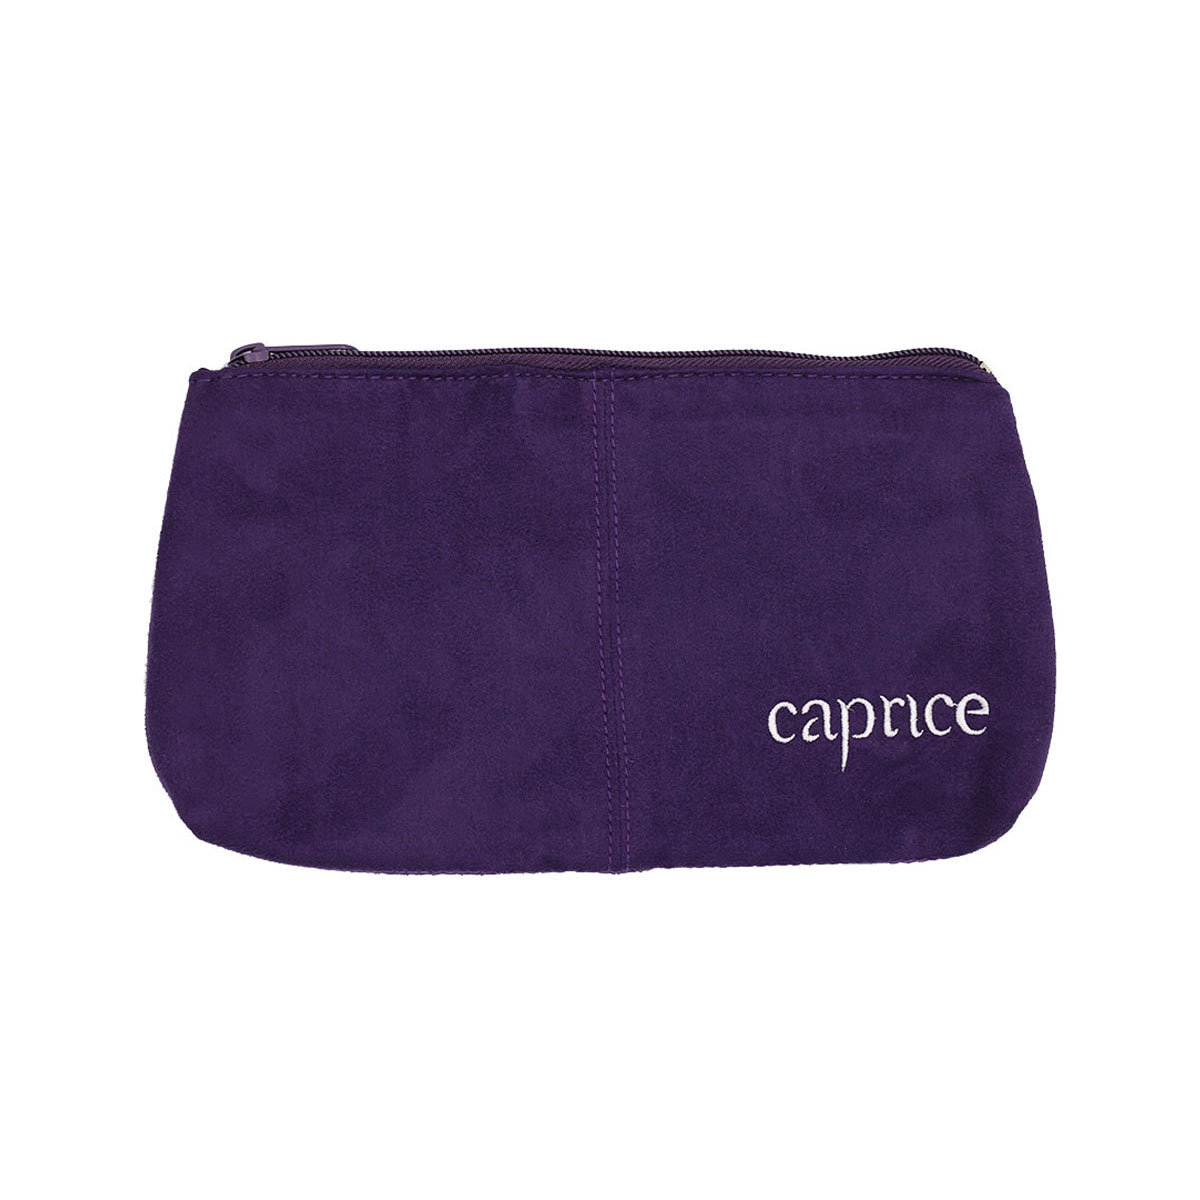 Caprice Make Up Bag